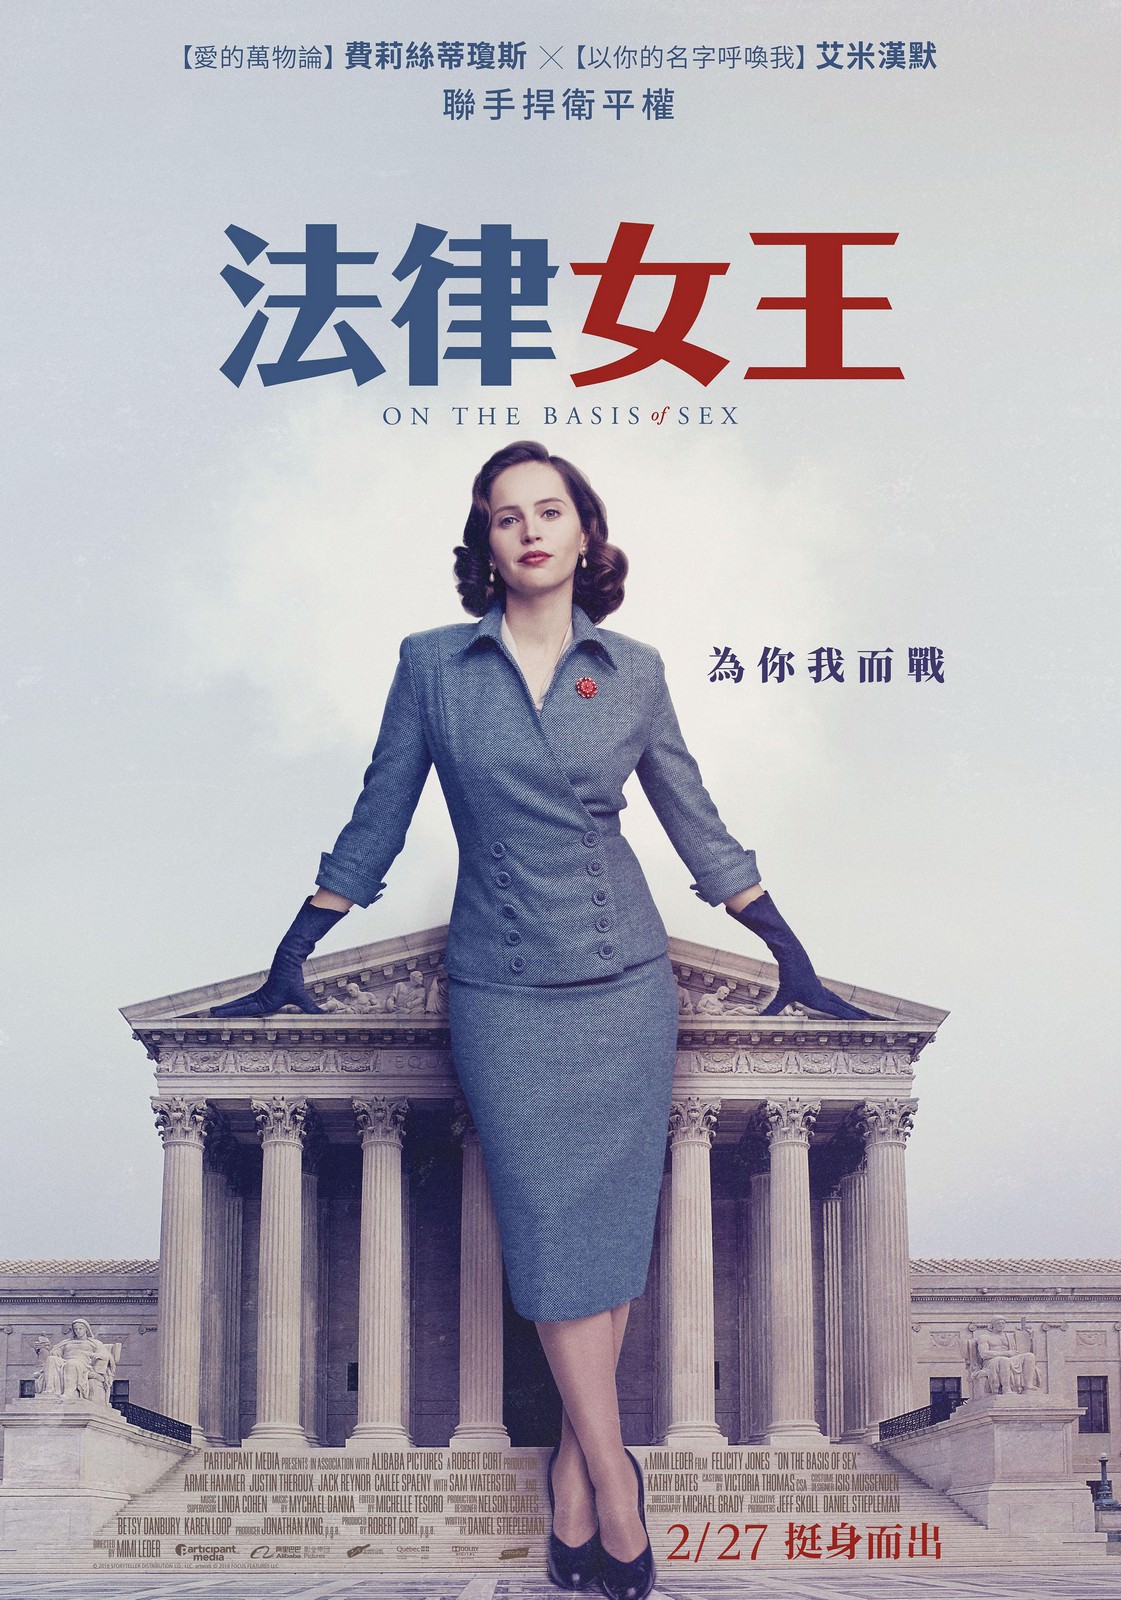 Movie, 法律女王 / On the Basis of Sex(美國, 2018年) / 司法女王(香港) / 性别为本(網路), 電影海報, 台灣